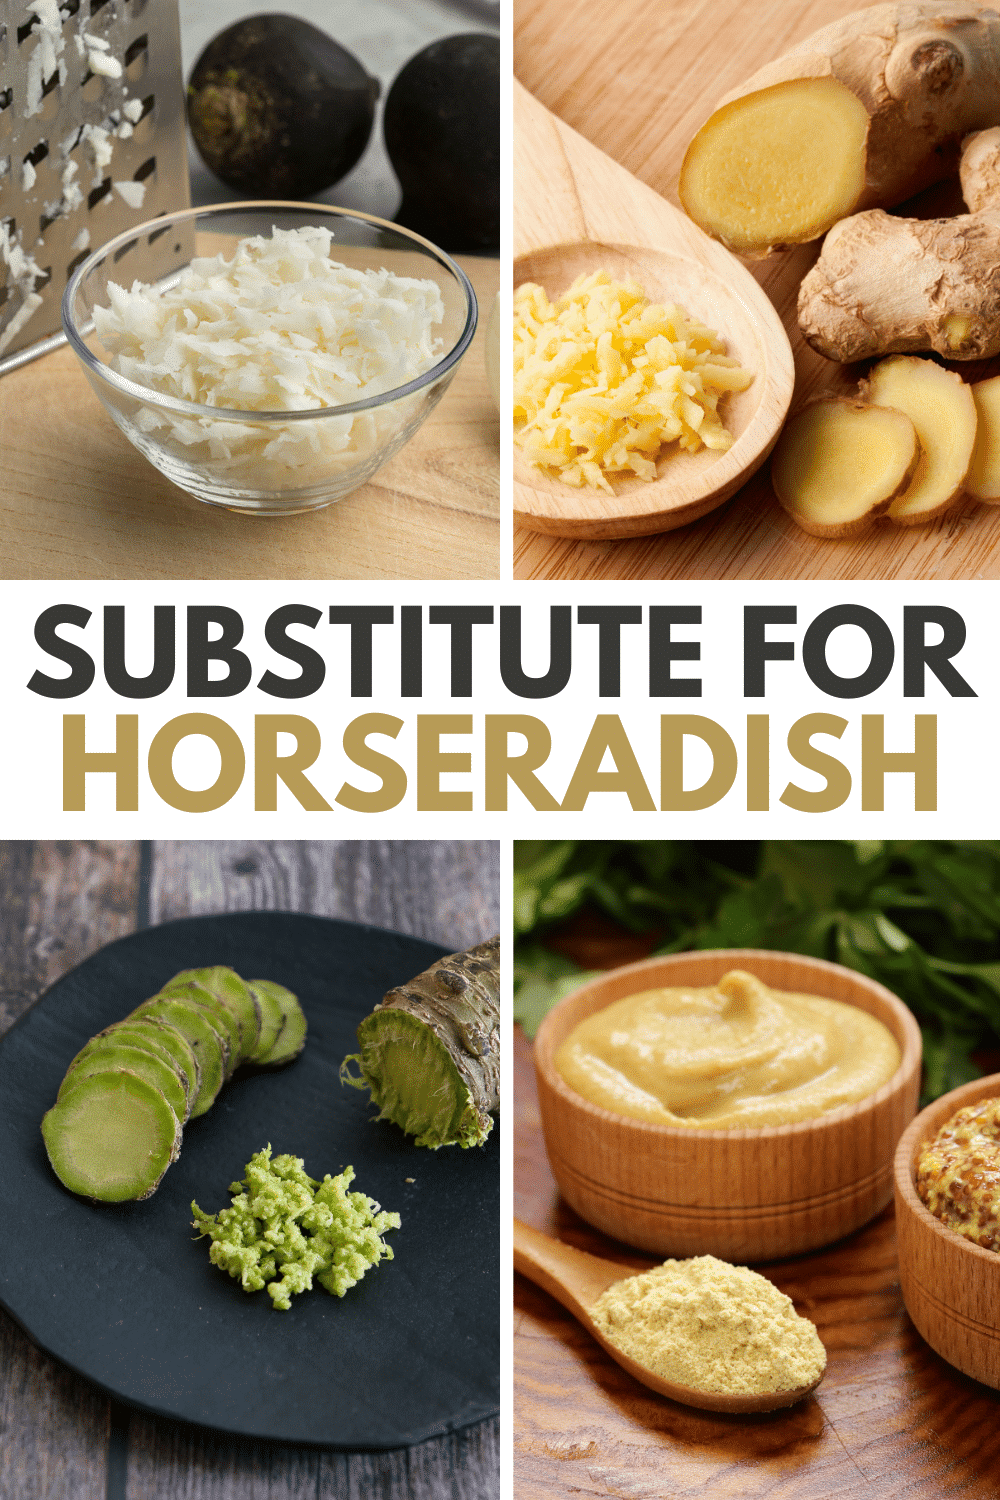 Horseradish substitutes for horseradish horseradish substitutes for horseradish horseradish substitutes for horseradish horseradish.